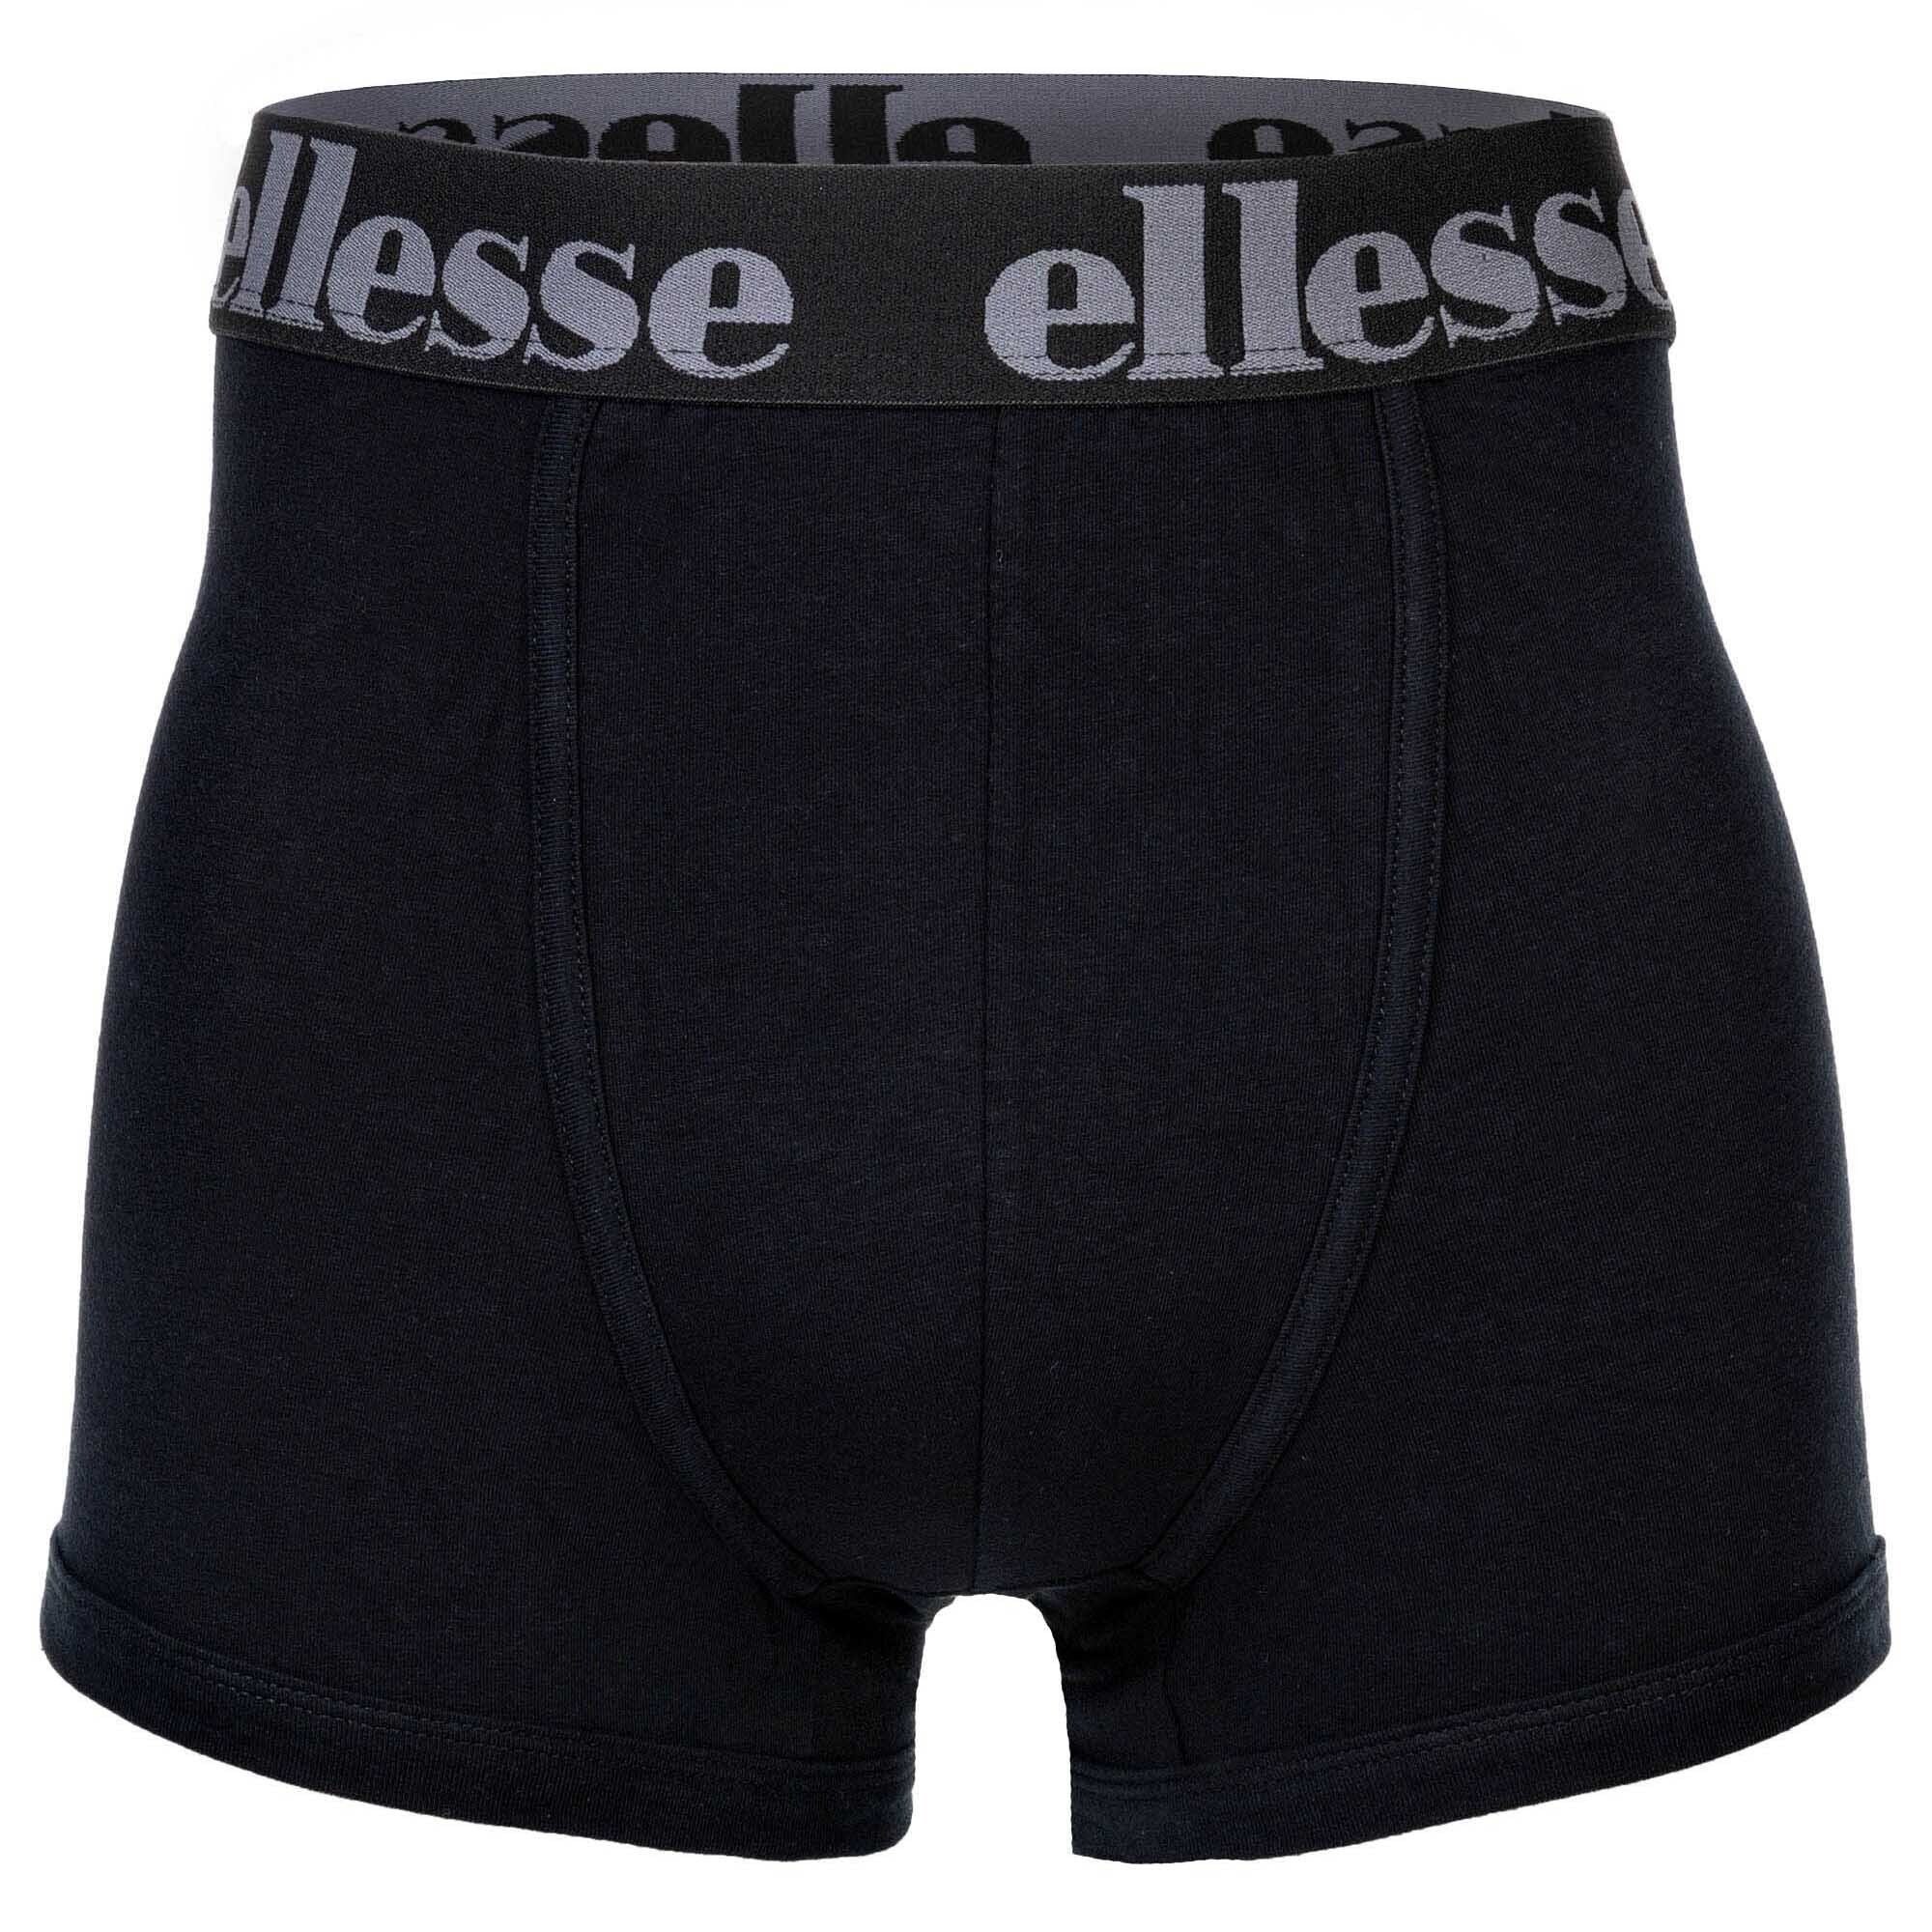 Ellesse Shorts, Boxer Pack Pack Herren 7 - 7er Schwarz/Bunt Boxer Boxer Yema